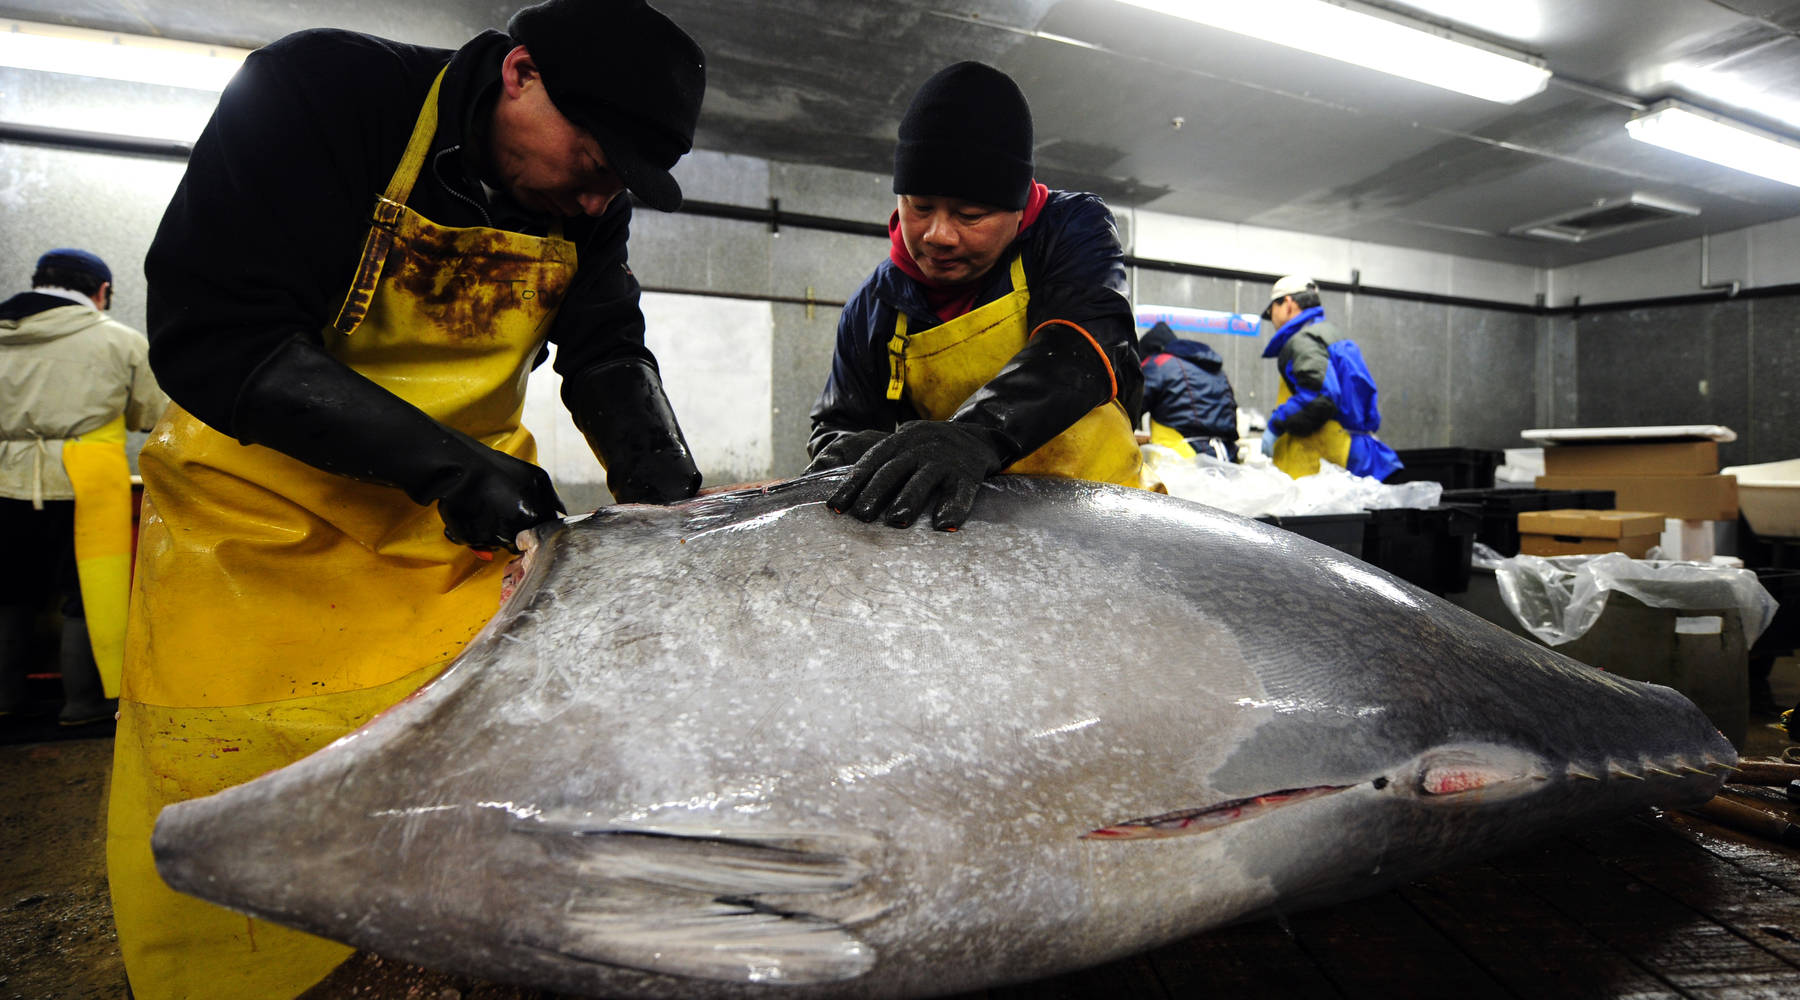 593-pound bluefin tuna sold for record $736,000 - Marketplace